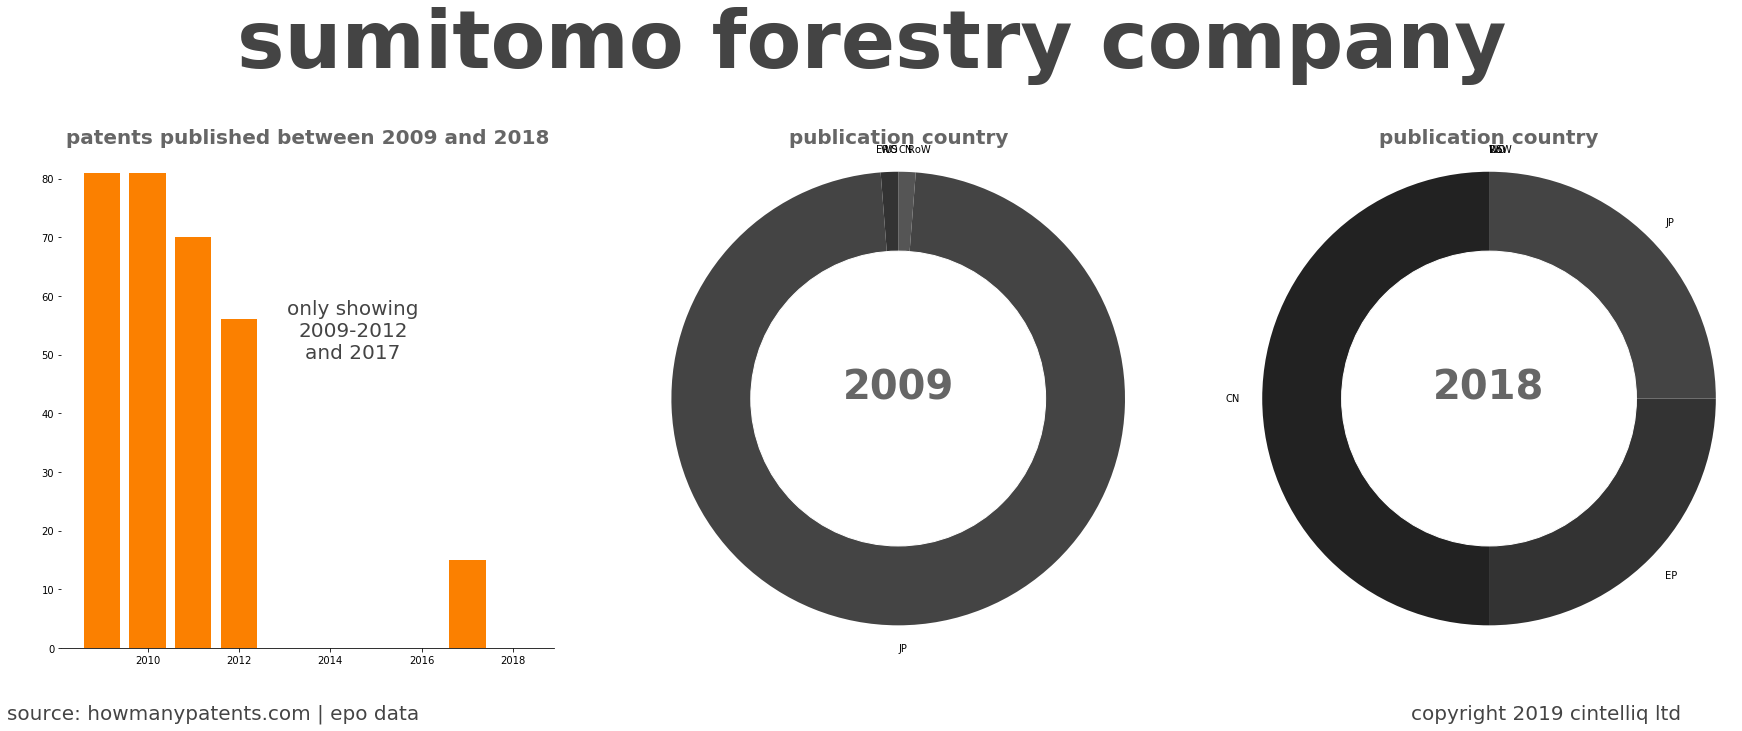 summary of patents for Sumitomo Forestry Company